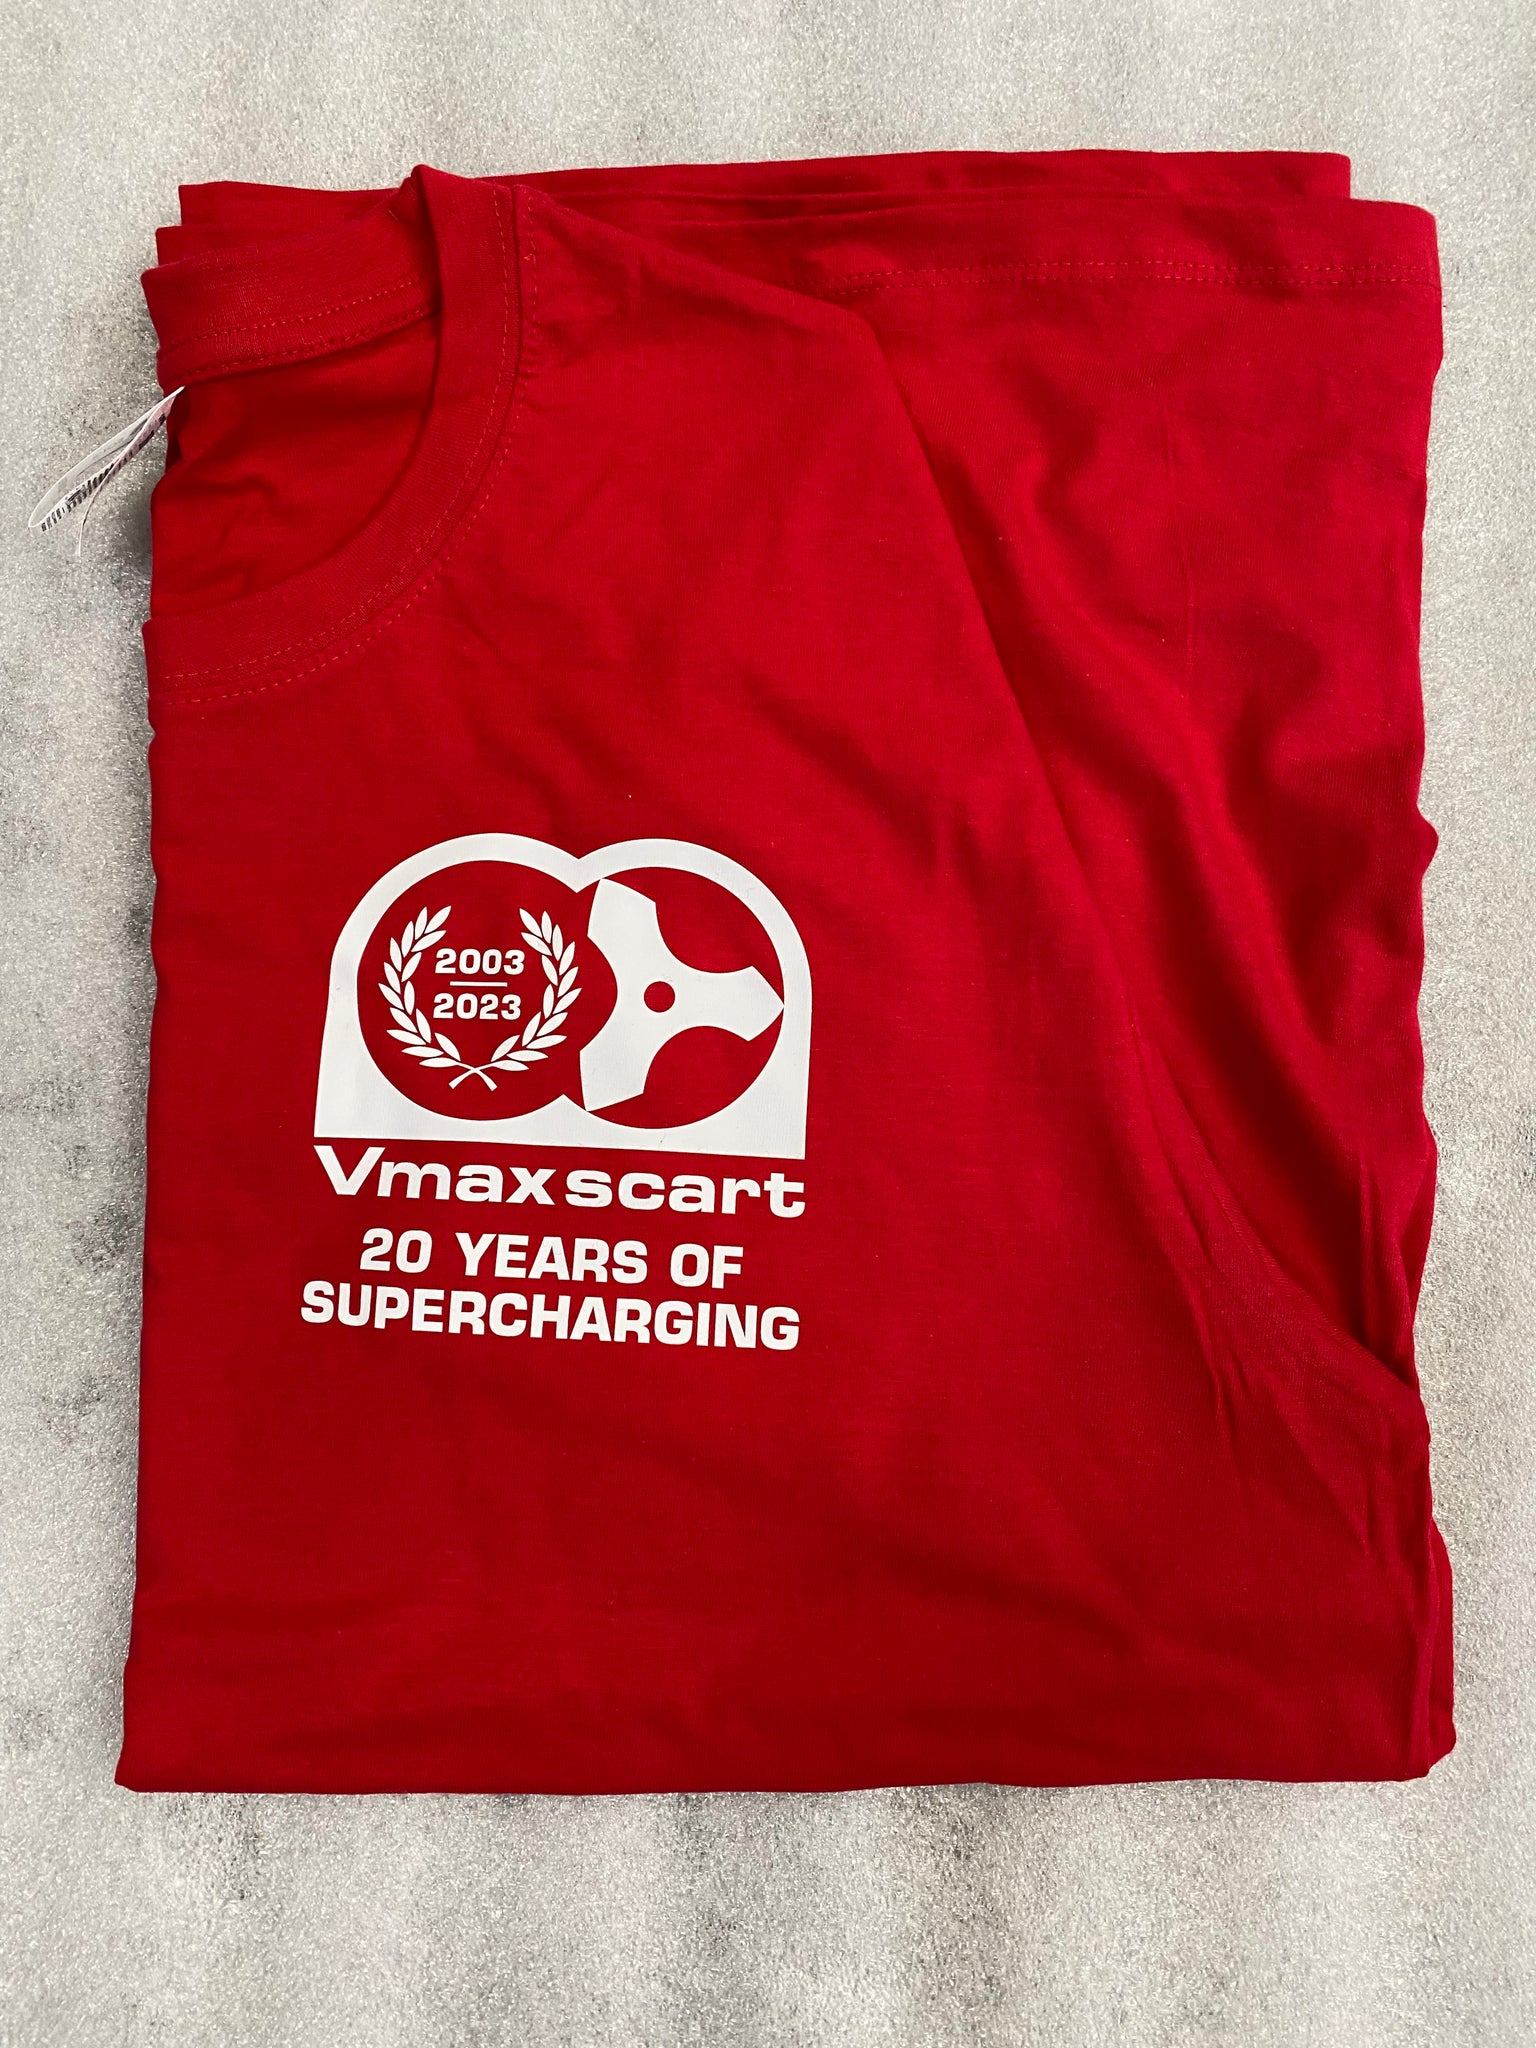 Vmaxscart T shirt